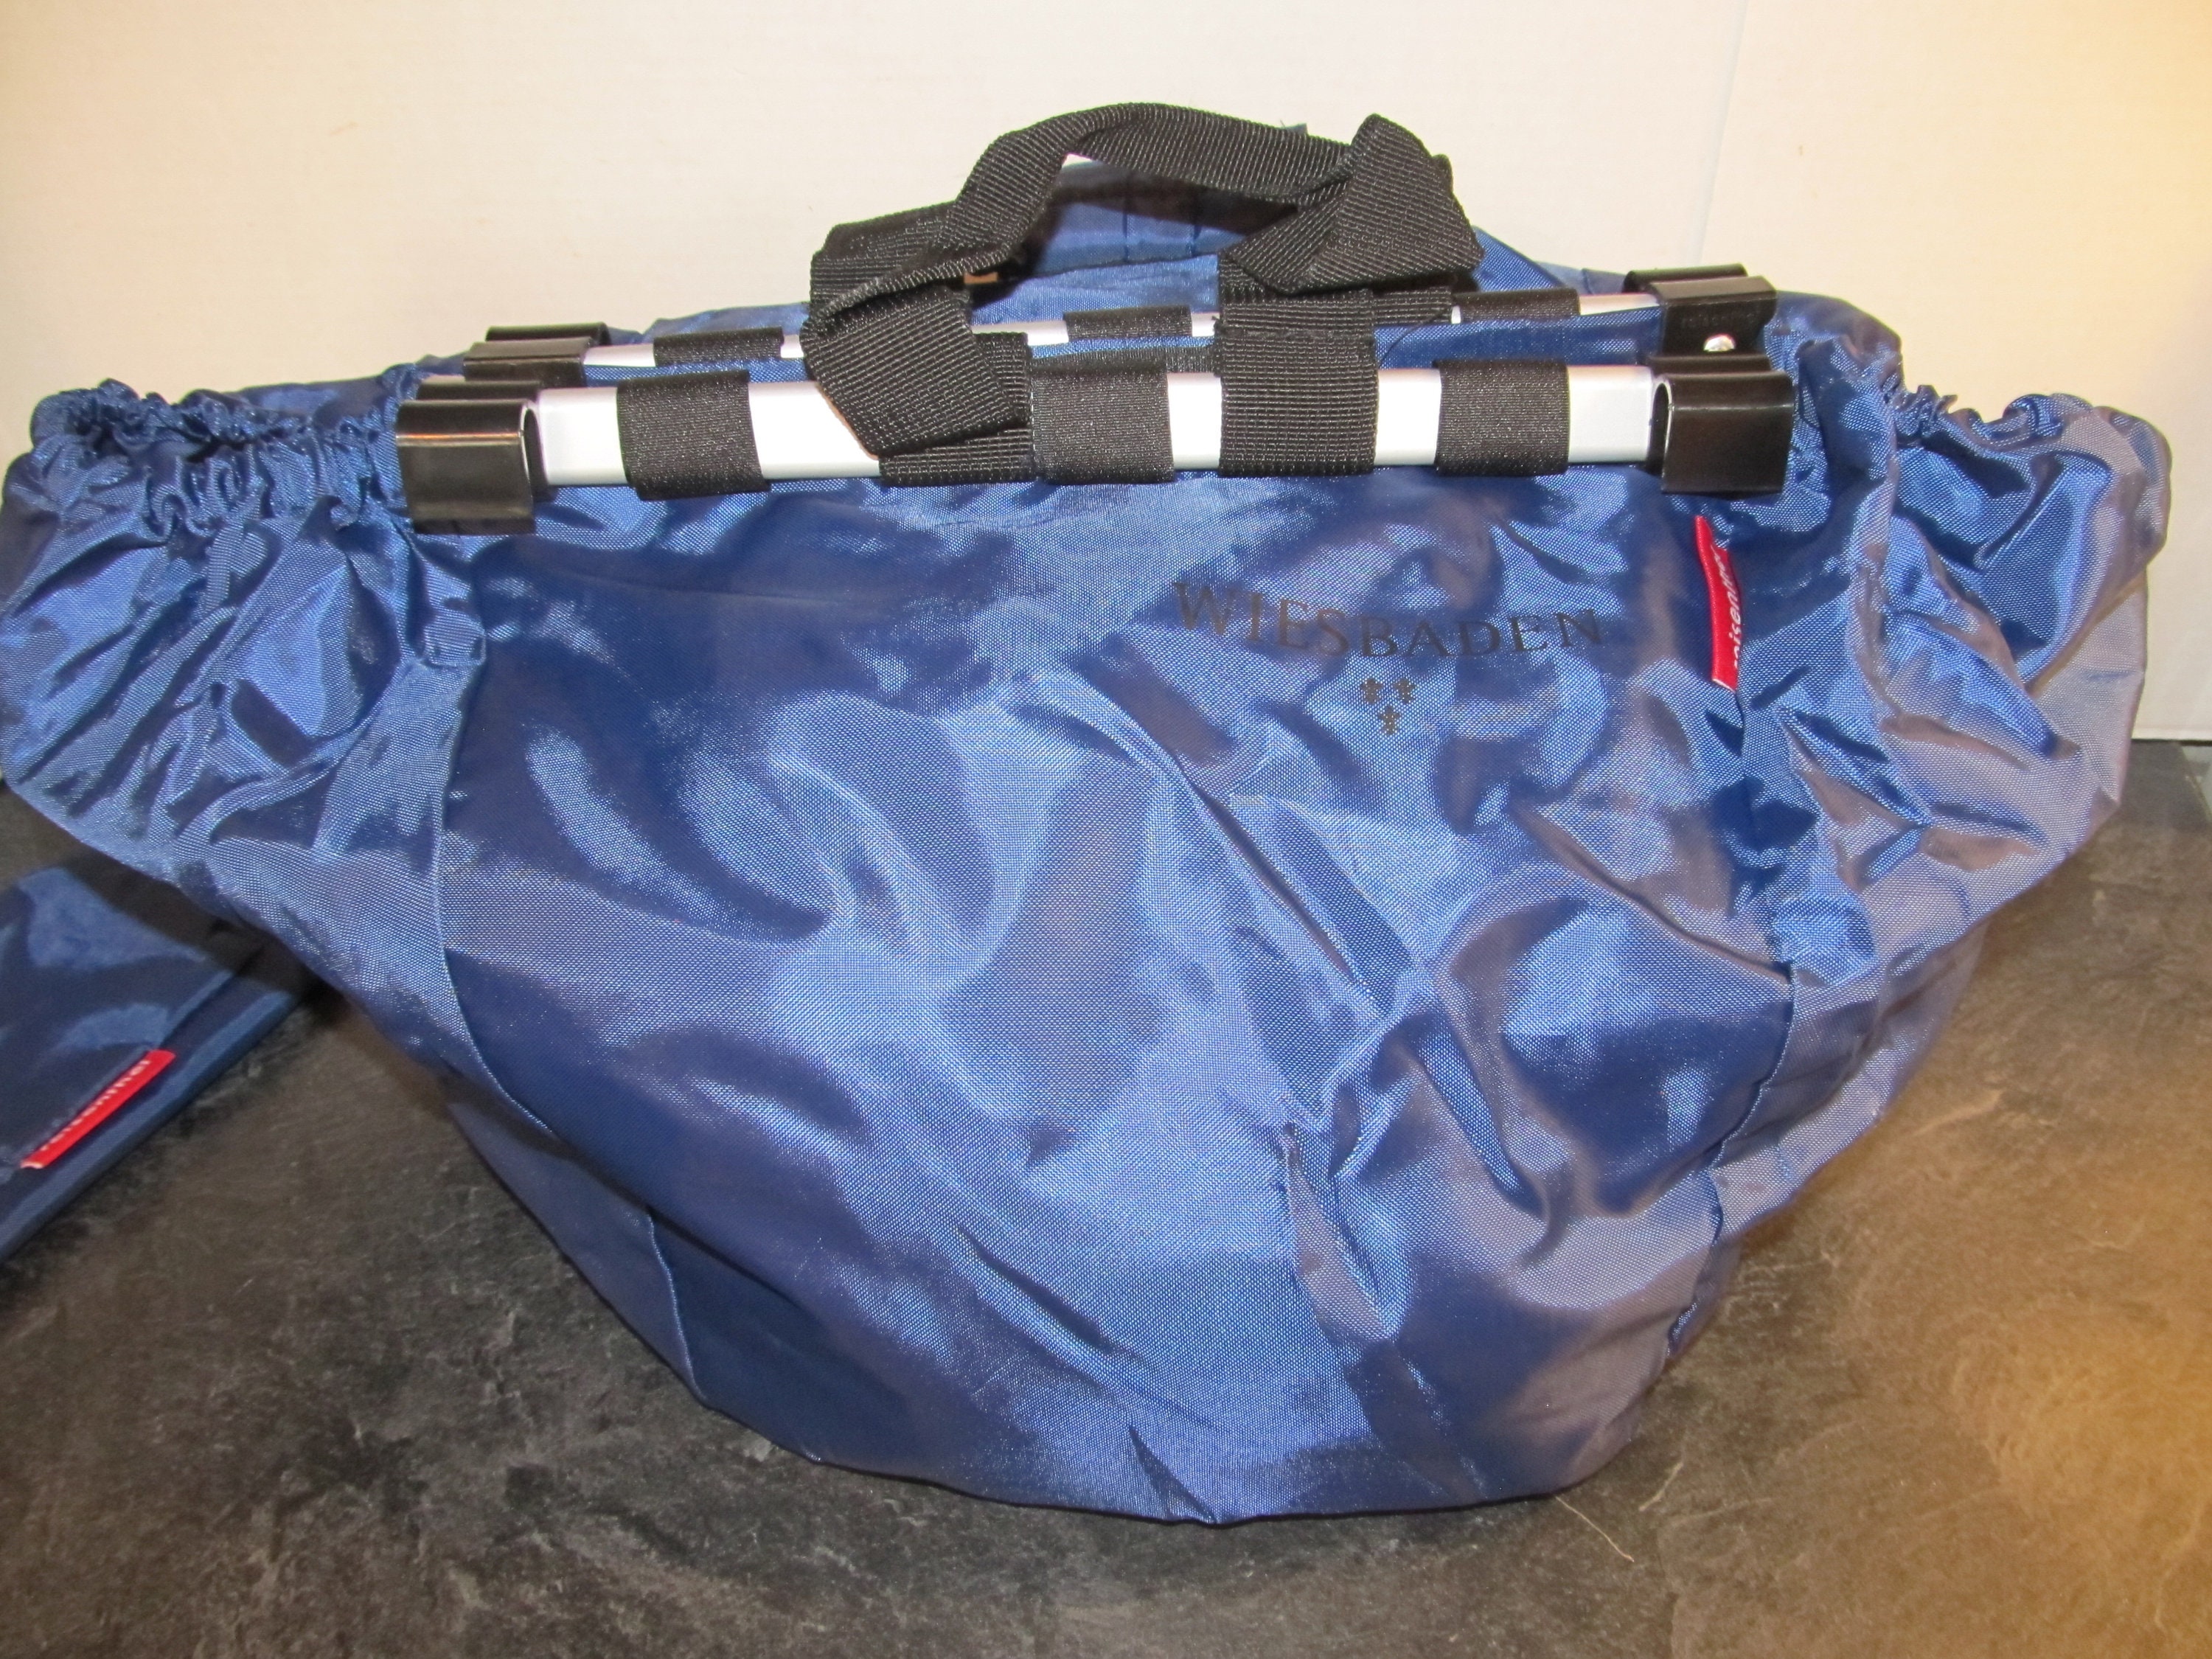 reisenthel case 1 organizer cosmetic bag cosmetic bag Black